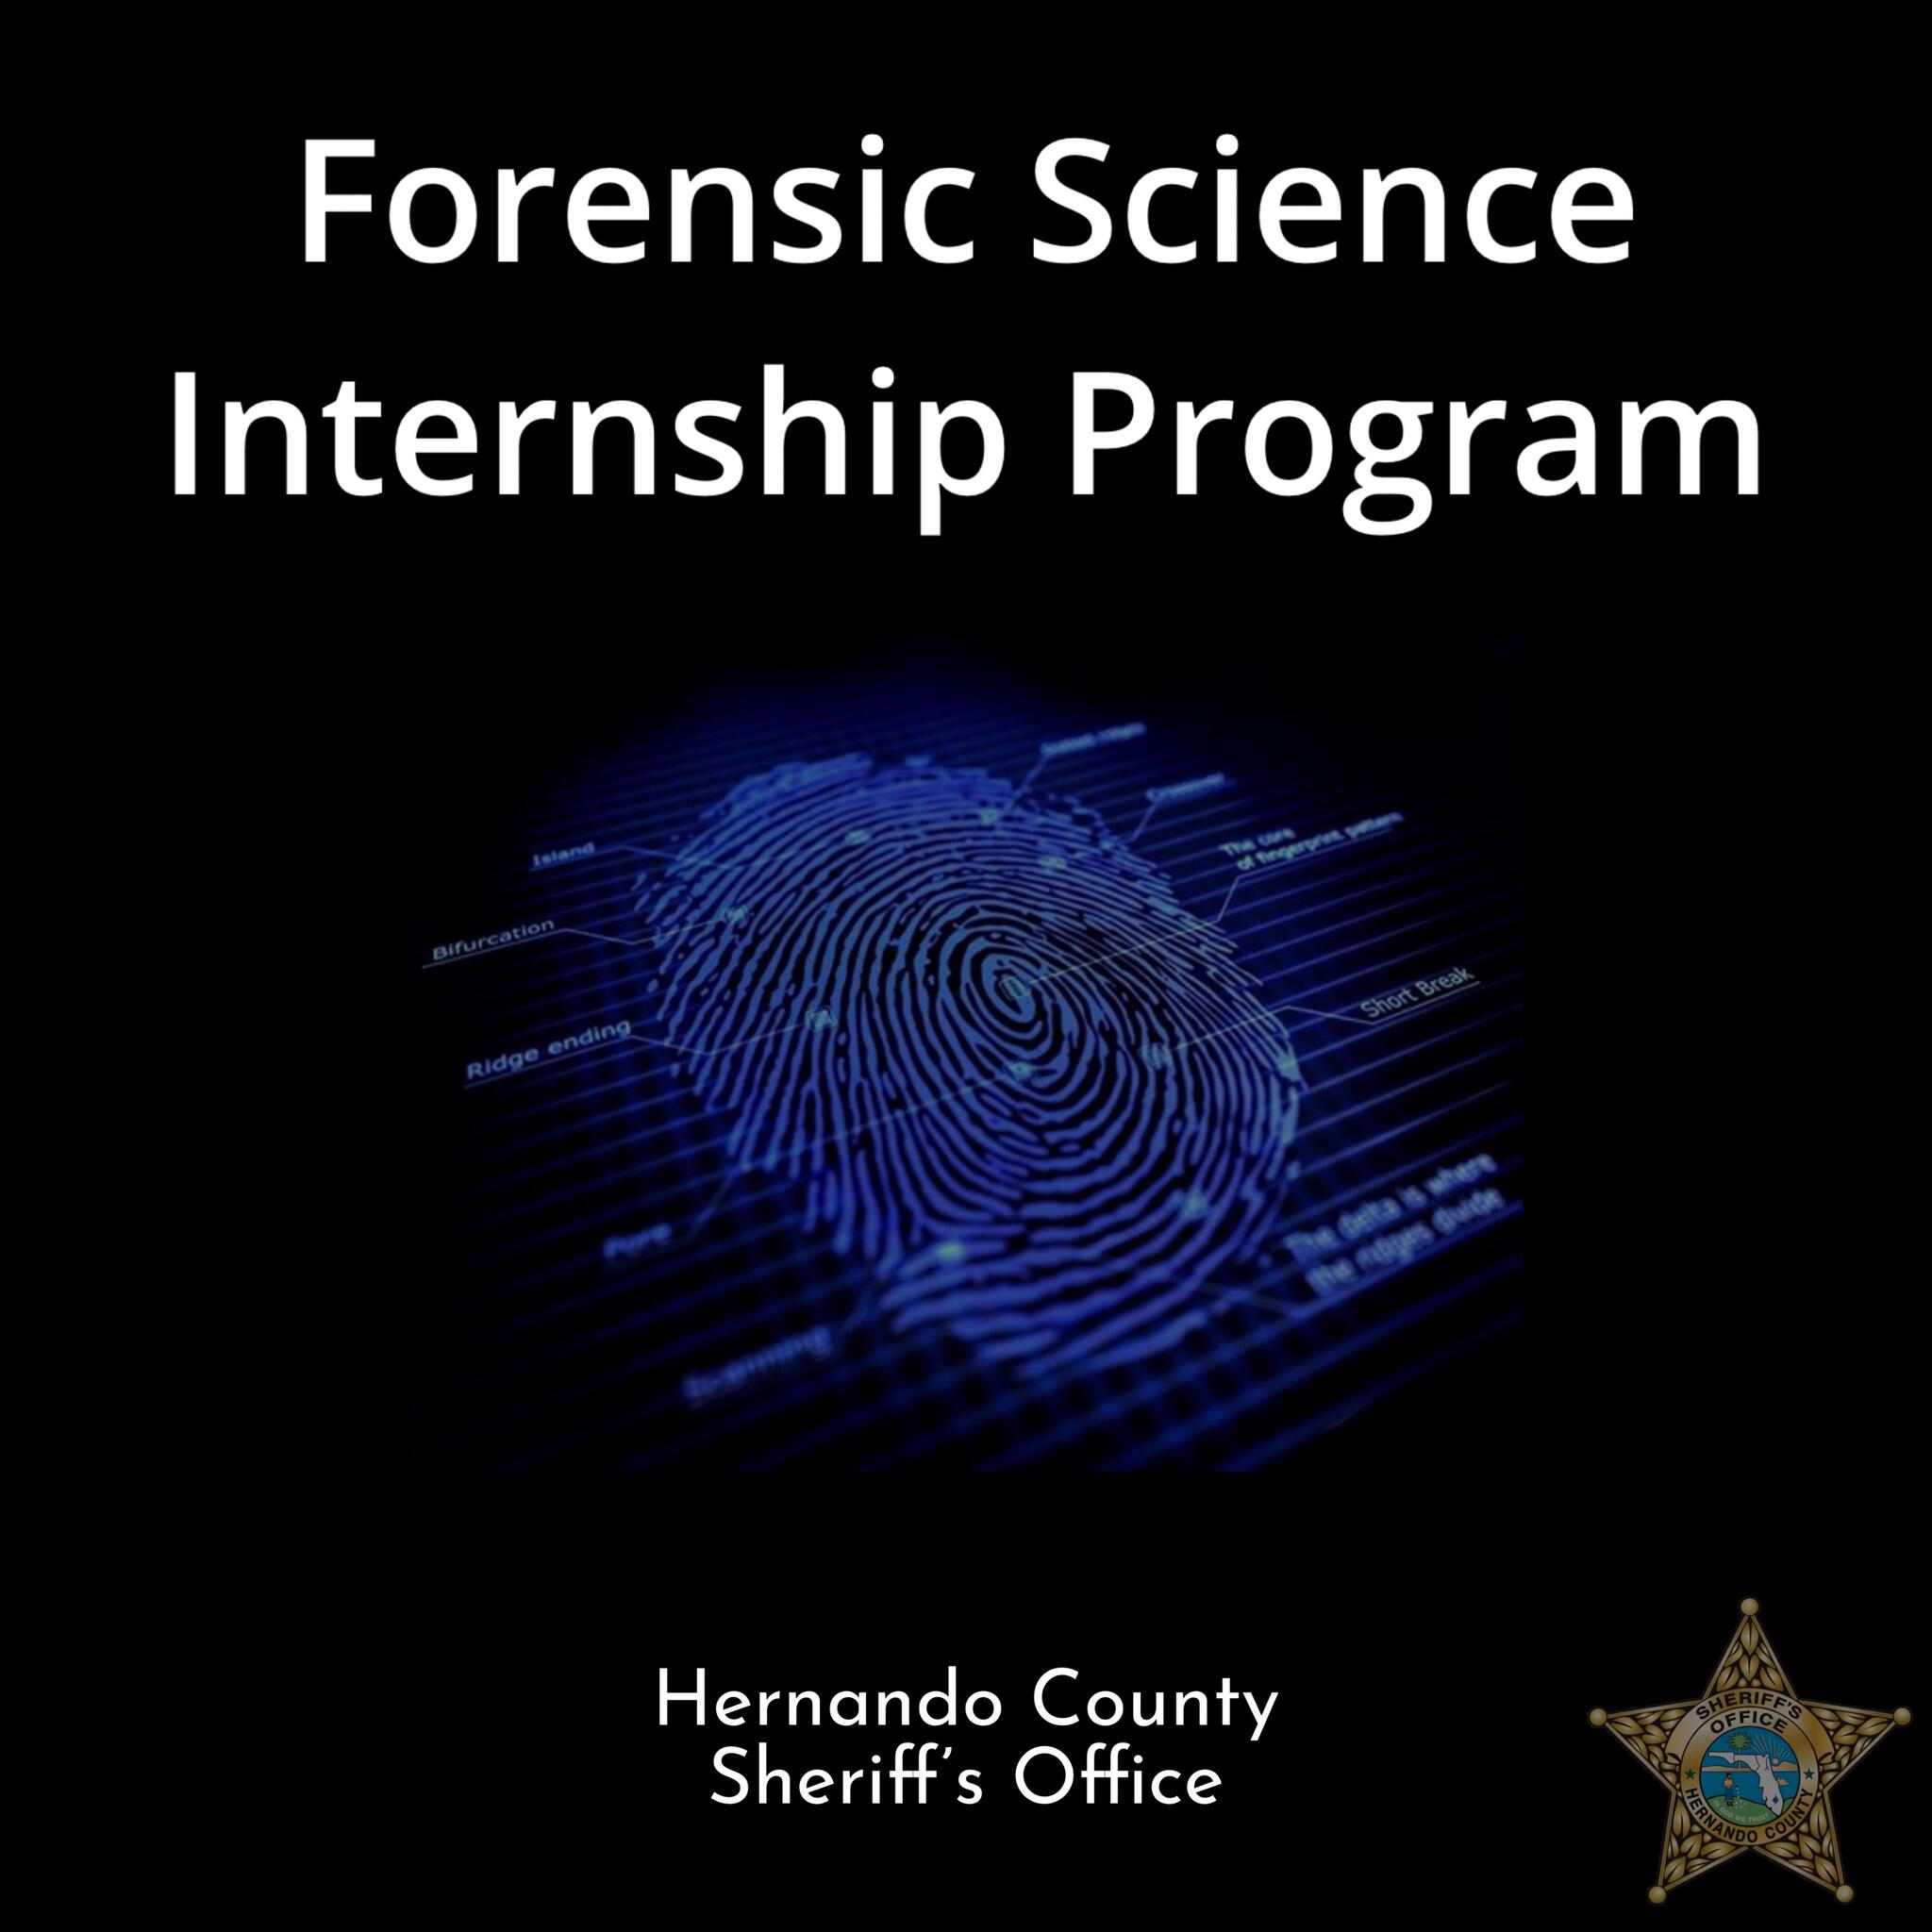 Forensic Science Internship Program (Hernando County Sheriff's Office